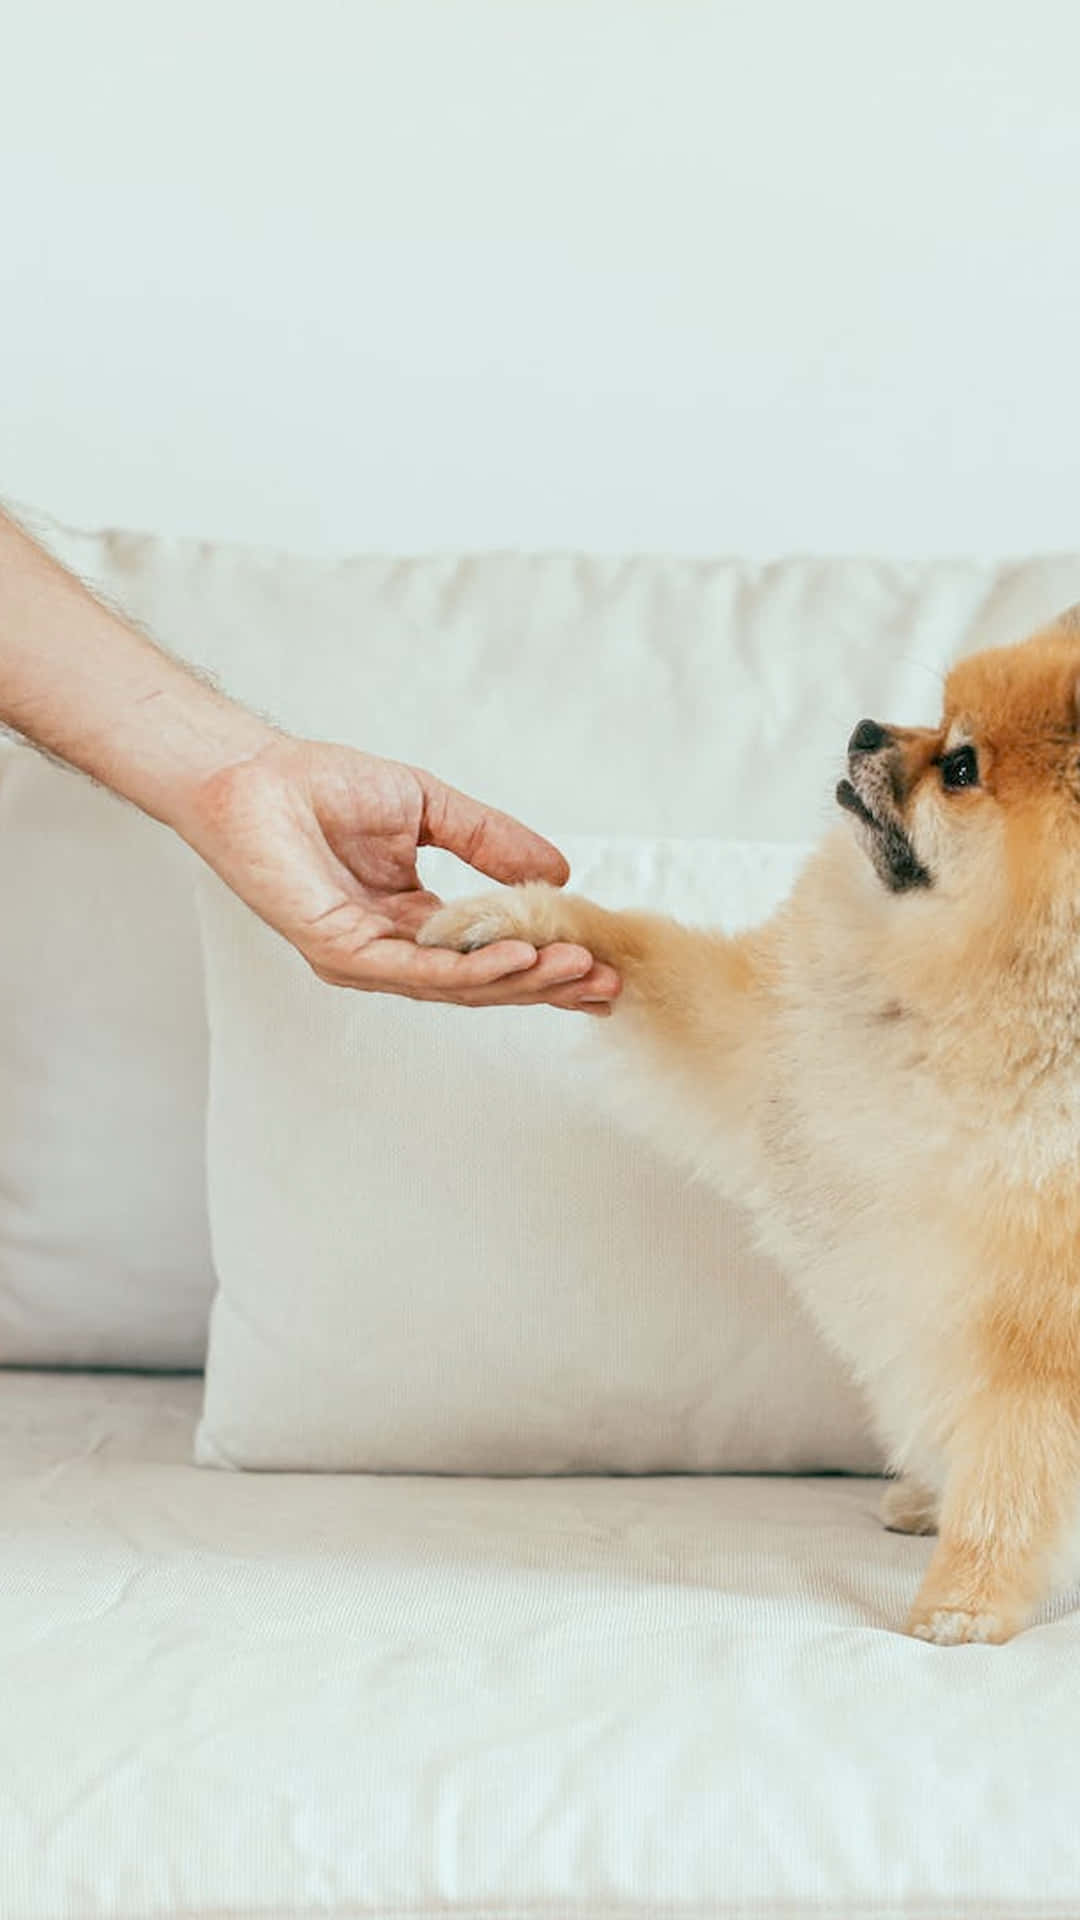 Handshake With Dog